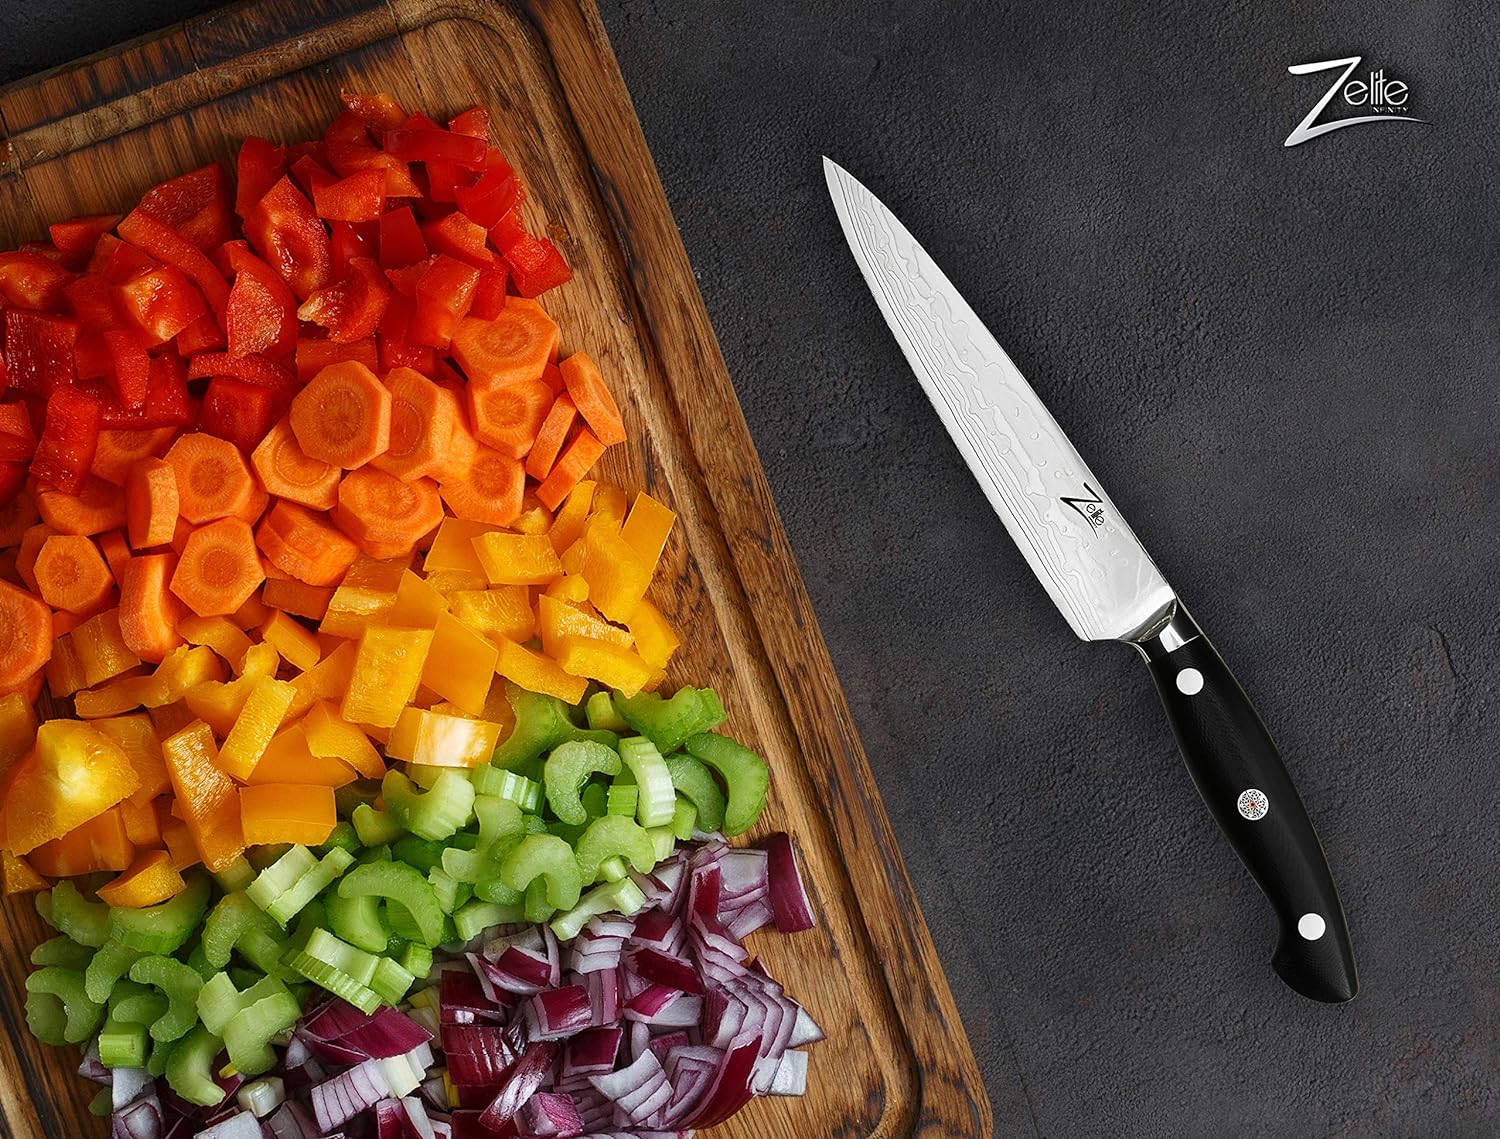 Zelite Infinity Utility Knife Kitchen, 6 Inch Chef Knife, Chopping Knife, Kitchen Utility Knife - Japanese AUS-10 Super Steel 45-Layer Damascus Knife - Razor Sharp Kitchen Knife - Leather Sheath